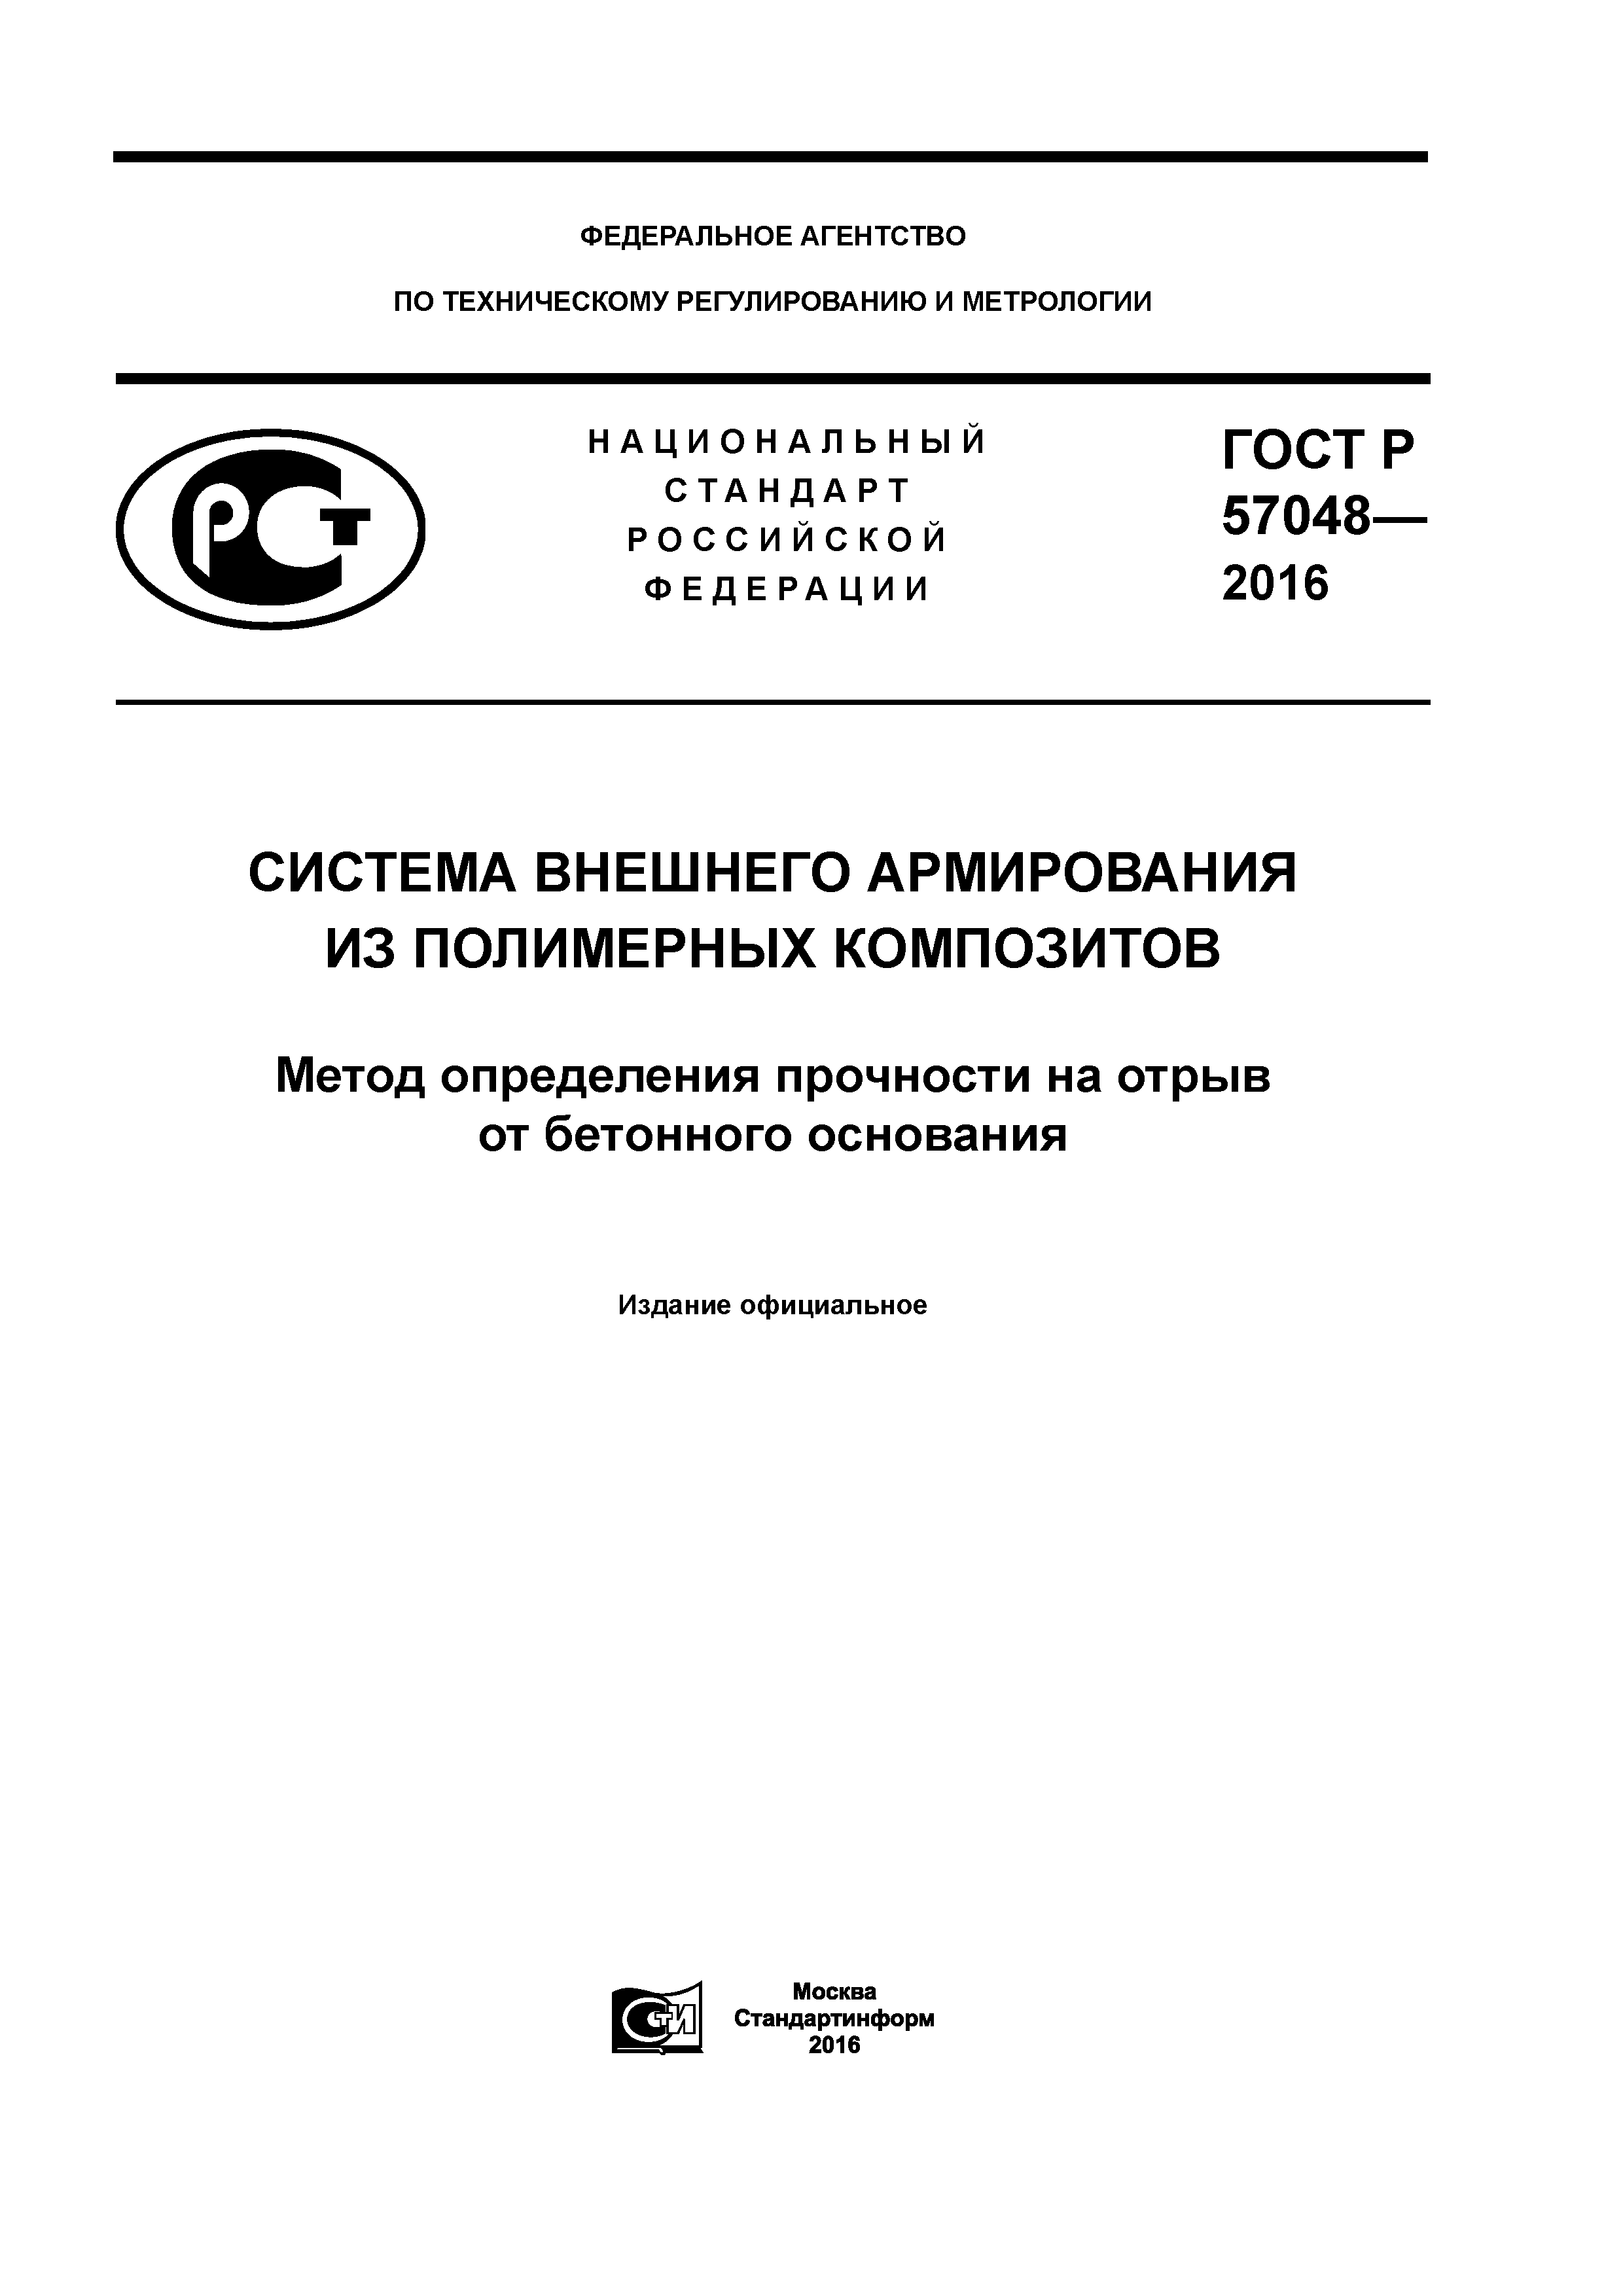 ГОСТ Р 57048-2016